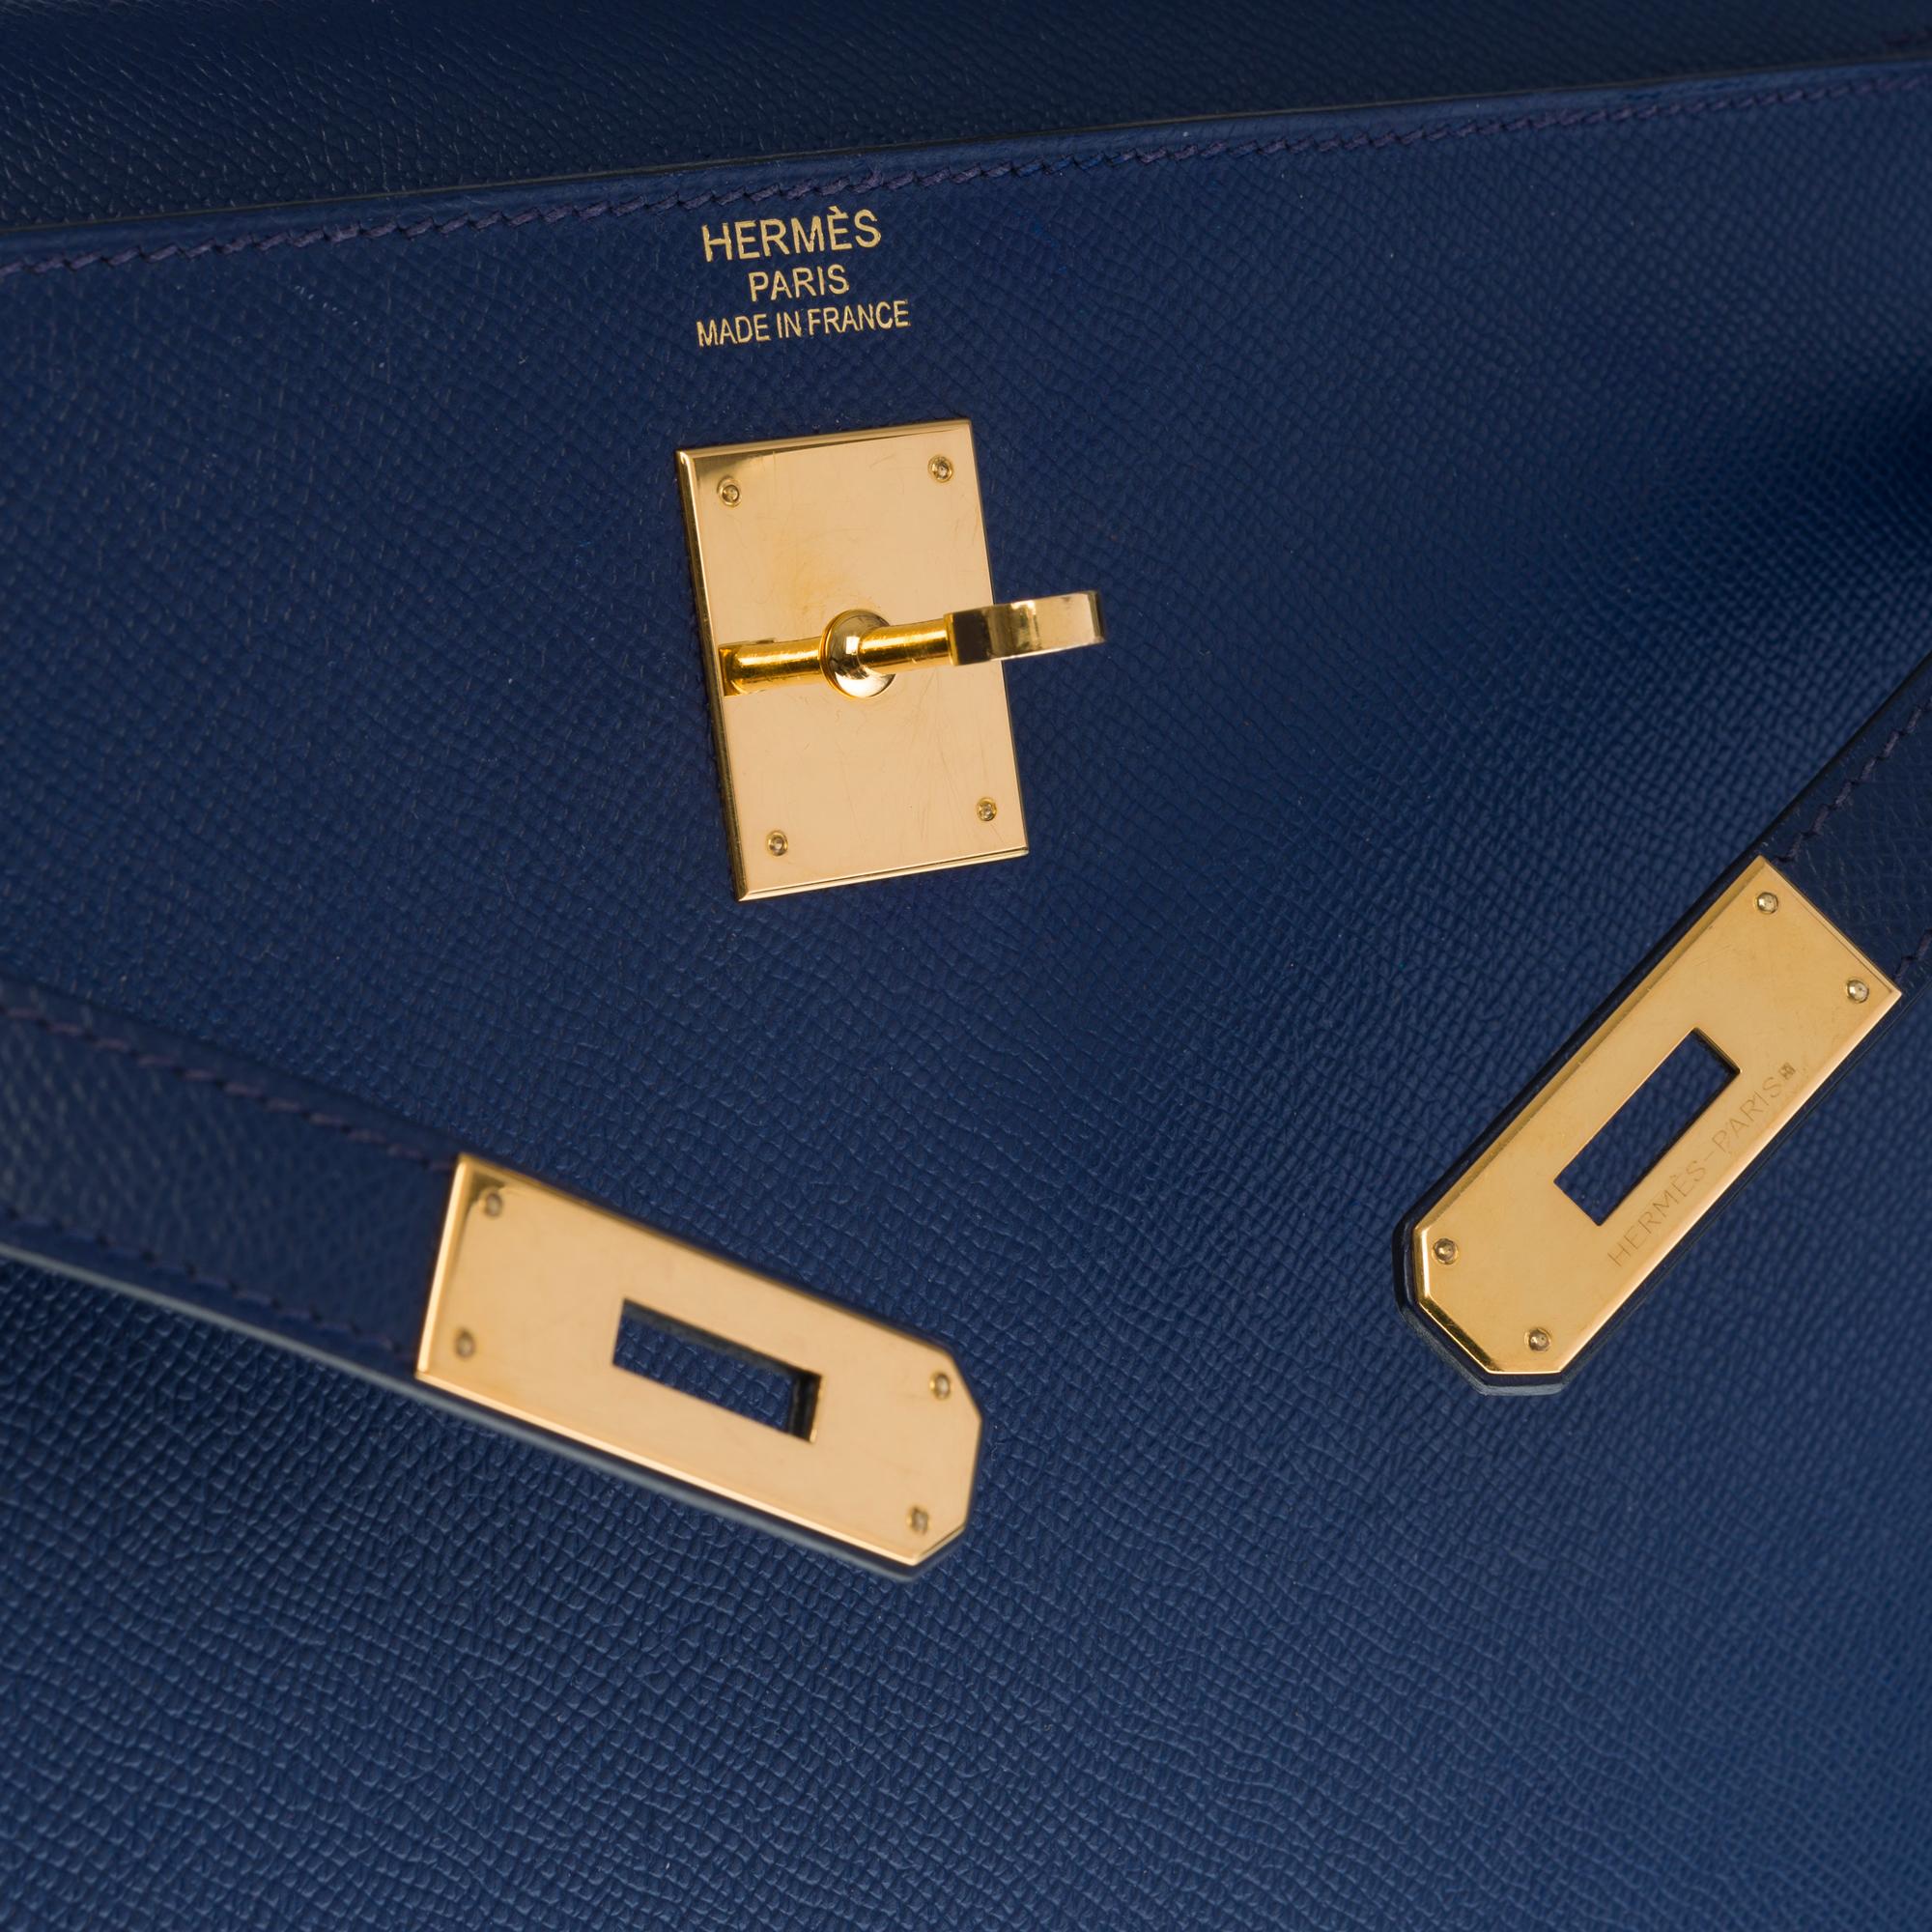 Women's Hermès Kelly 35 sellier strap shoulder bag in epsom blue saphir leather, GHW